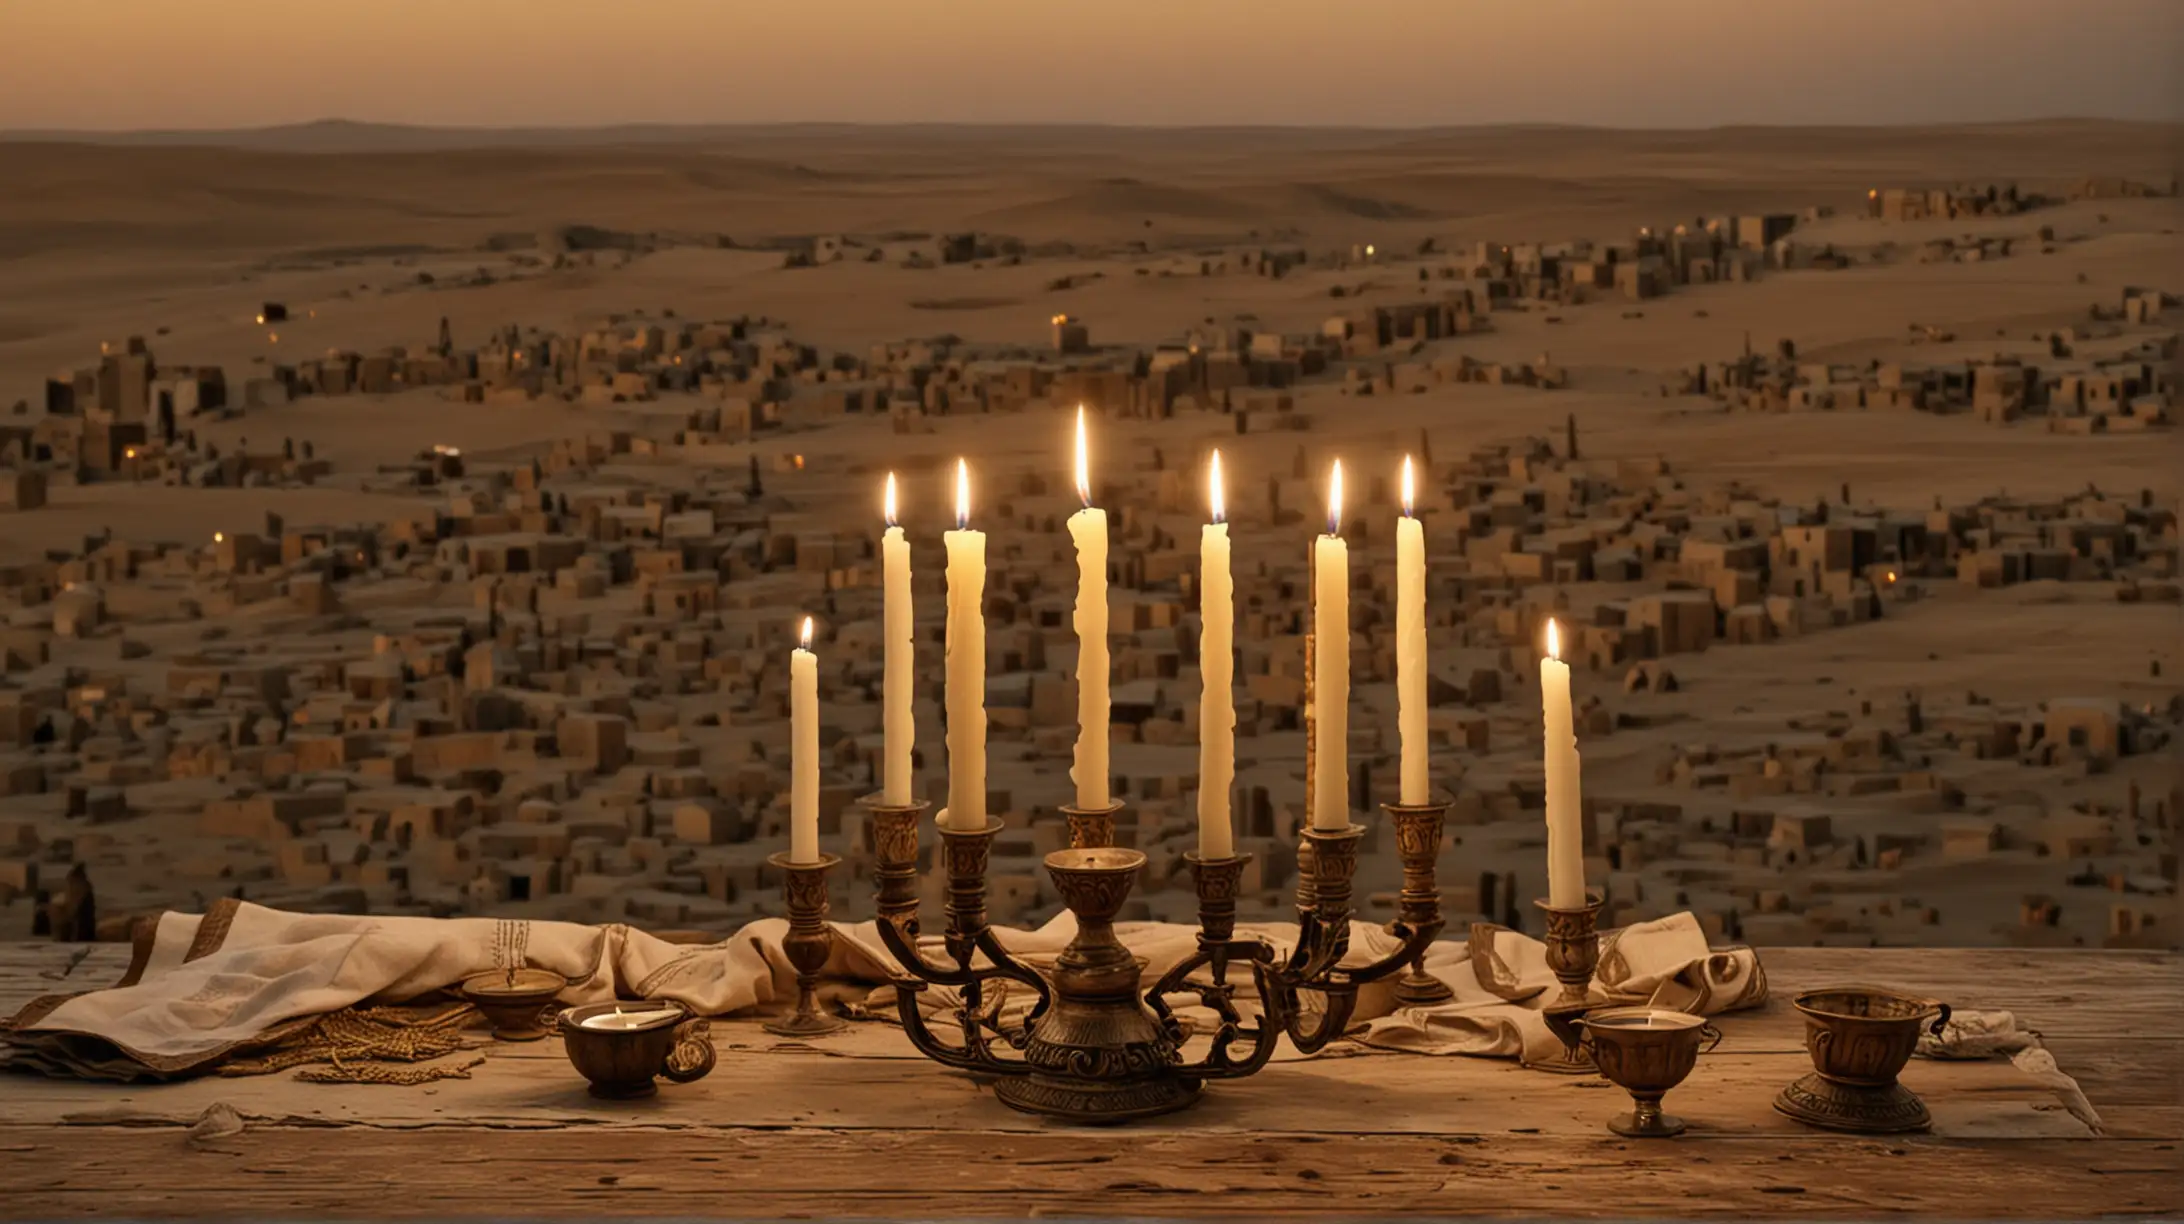 Biblical Moses Era Illuminated 7Candle Menorah in Desert Oasis